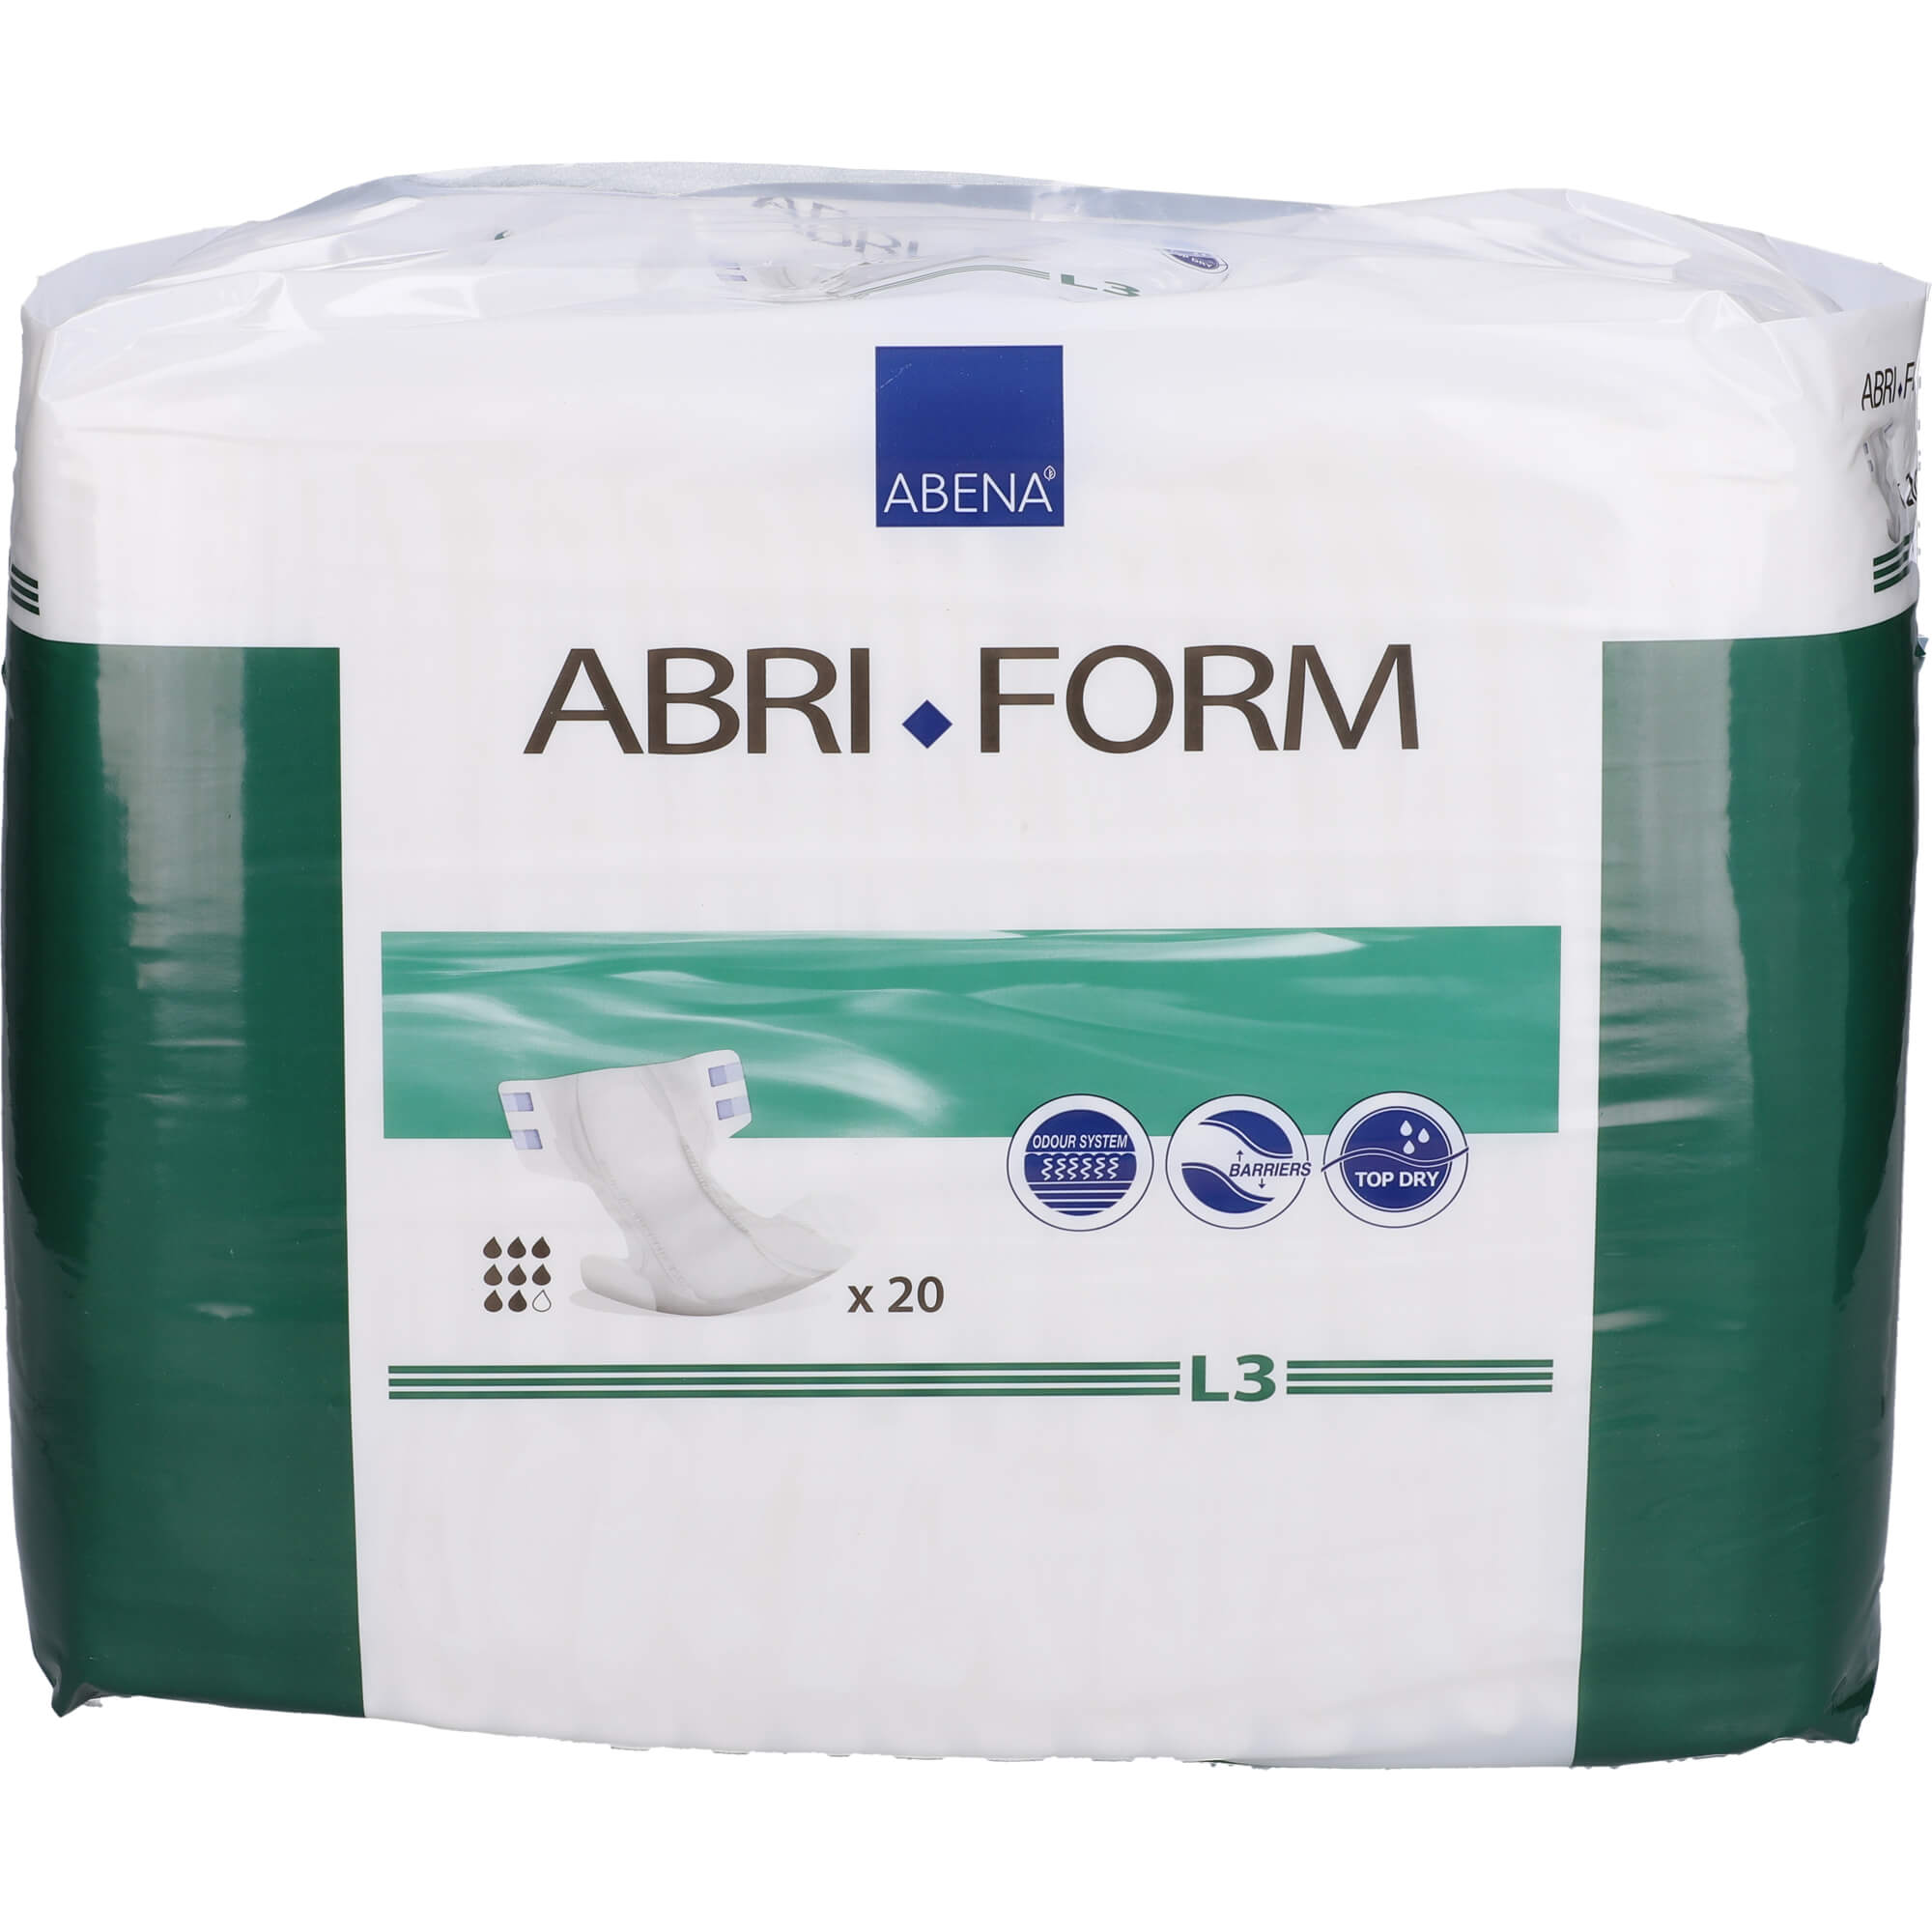 ABRI Form large extra